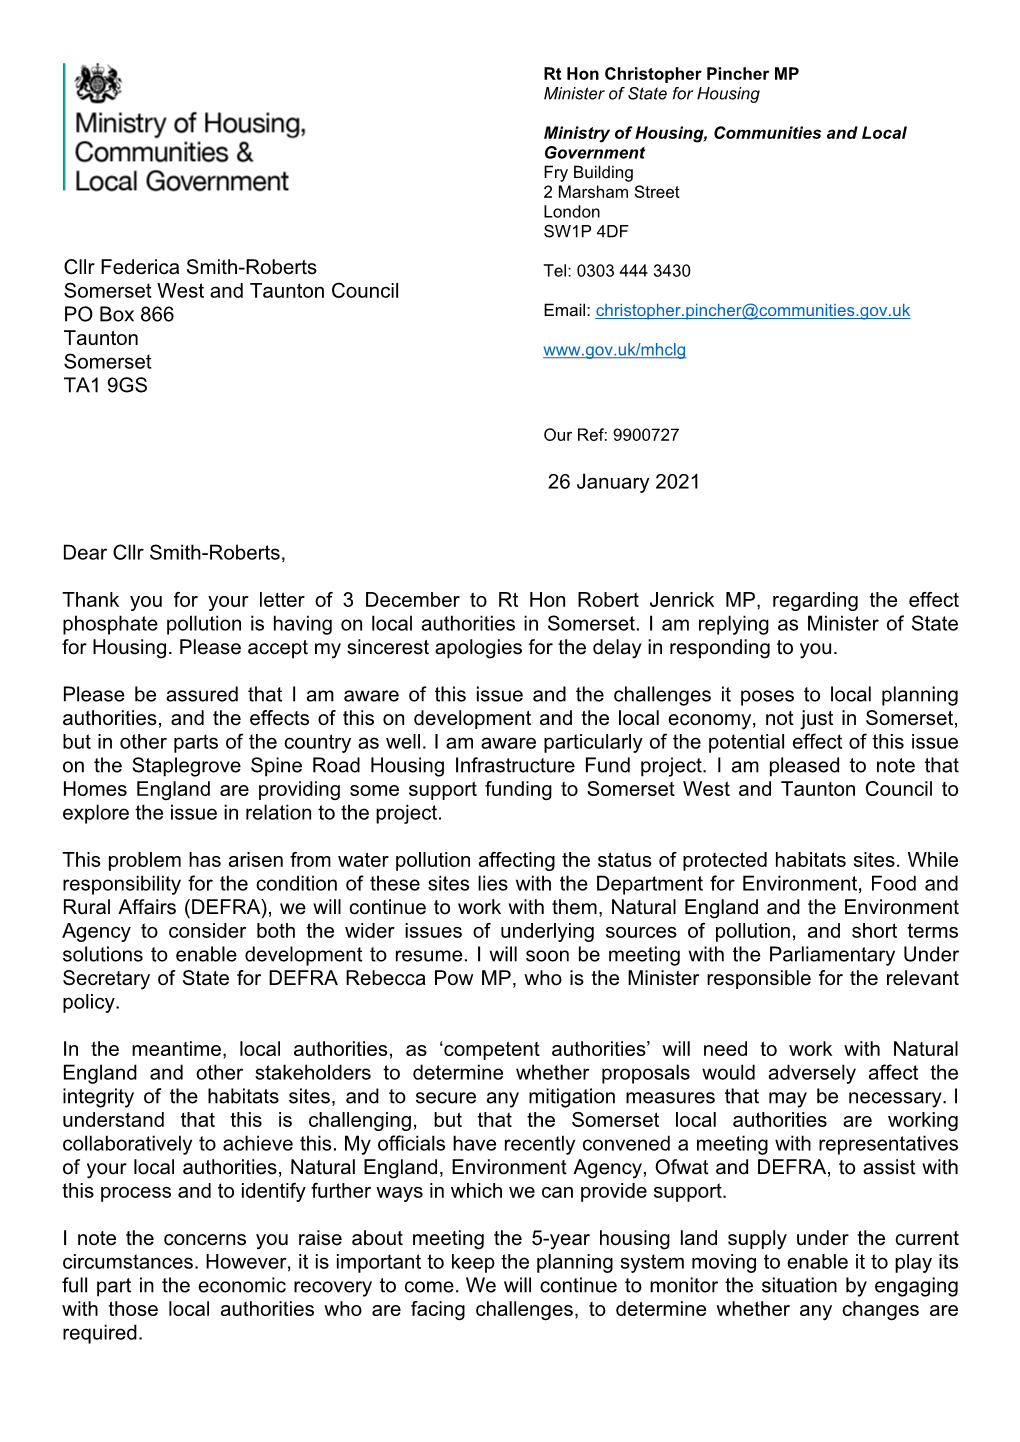 Letter of Response from Rt Hon Christopher Pincher MP for MHCLG